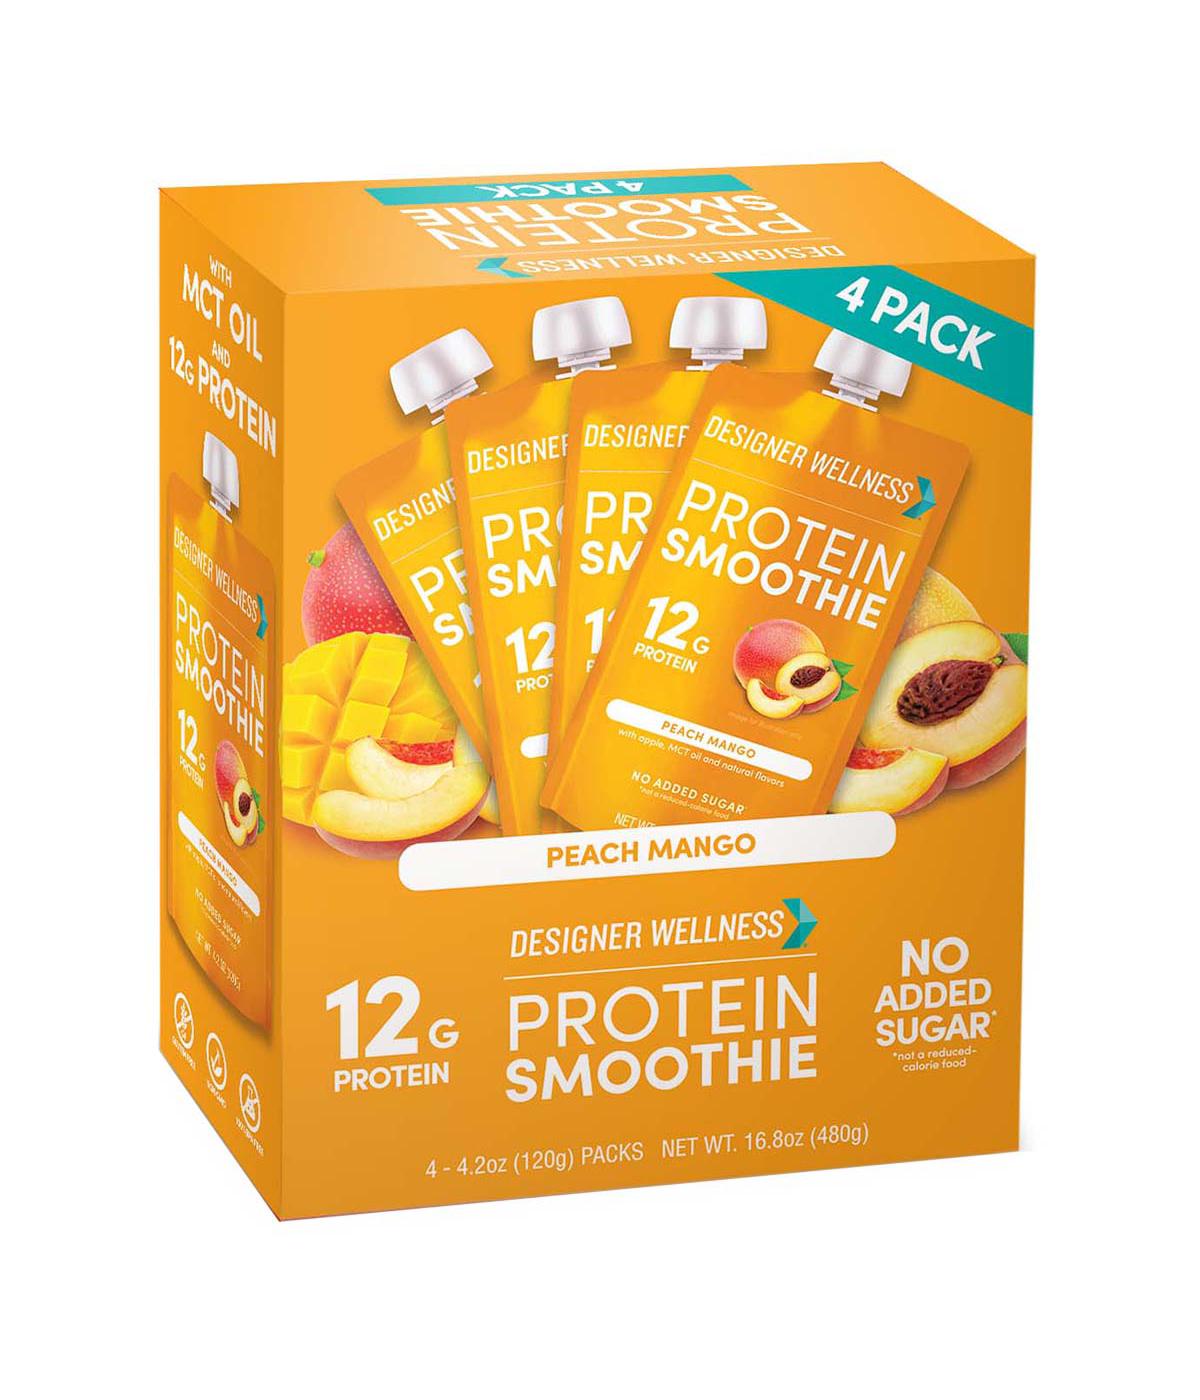 Designer Wellness 12G Protein Smoothie 4 pk - Peach Mango; image 1 of 2